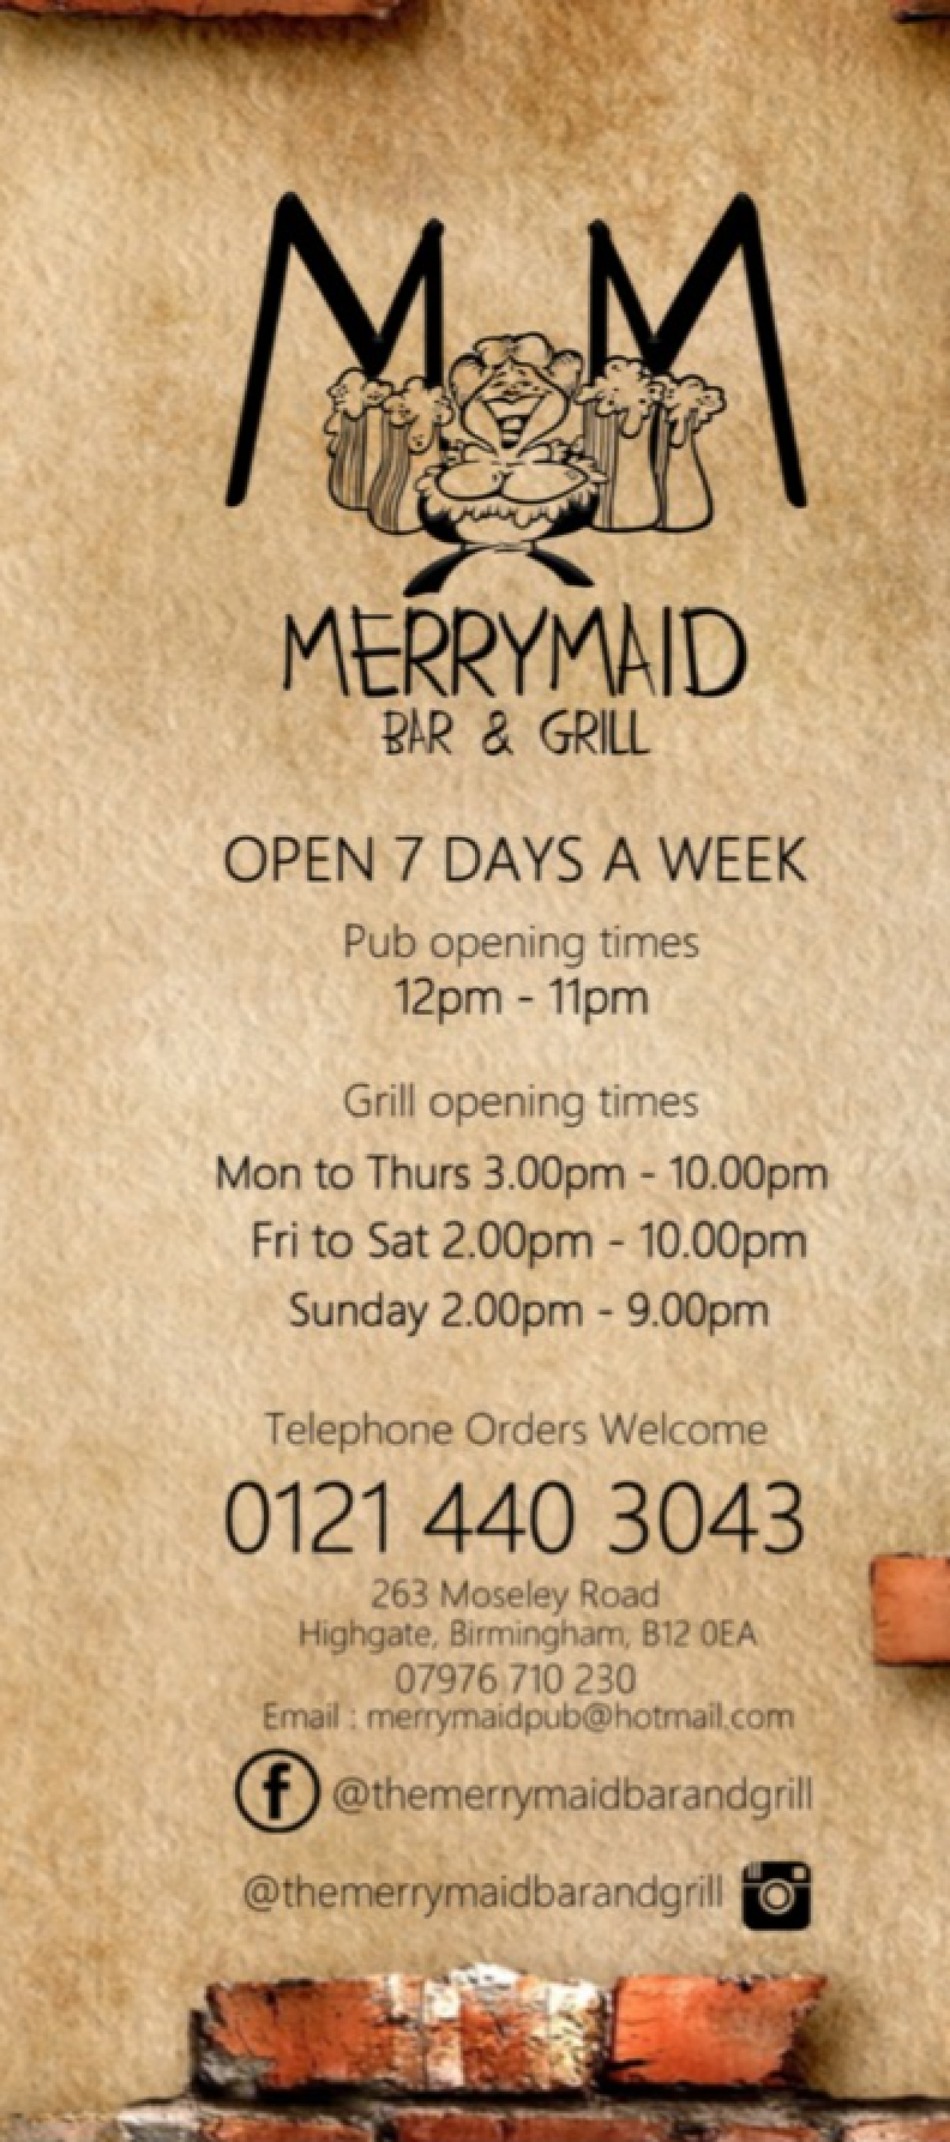 Takeaway Restaurant Menu Page - The Merrymaid Bar and Grill - Birmingham